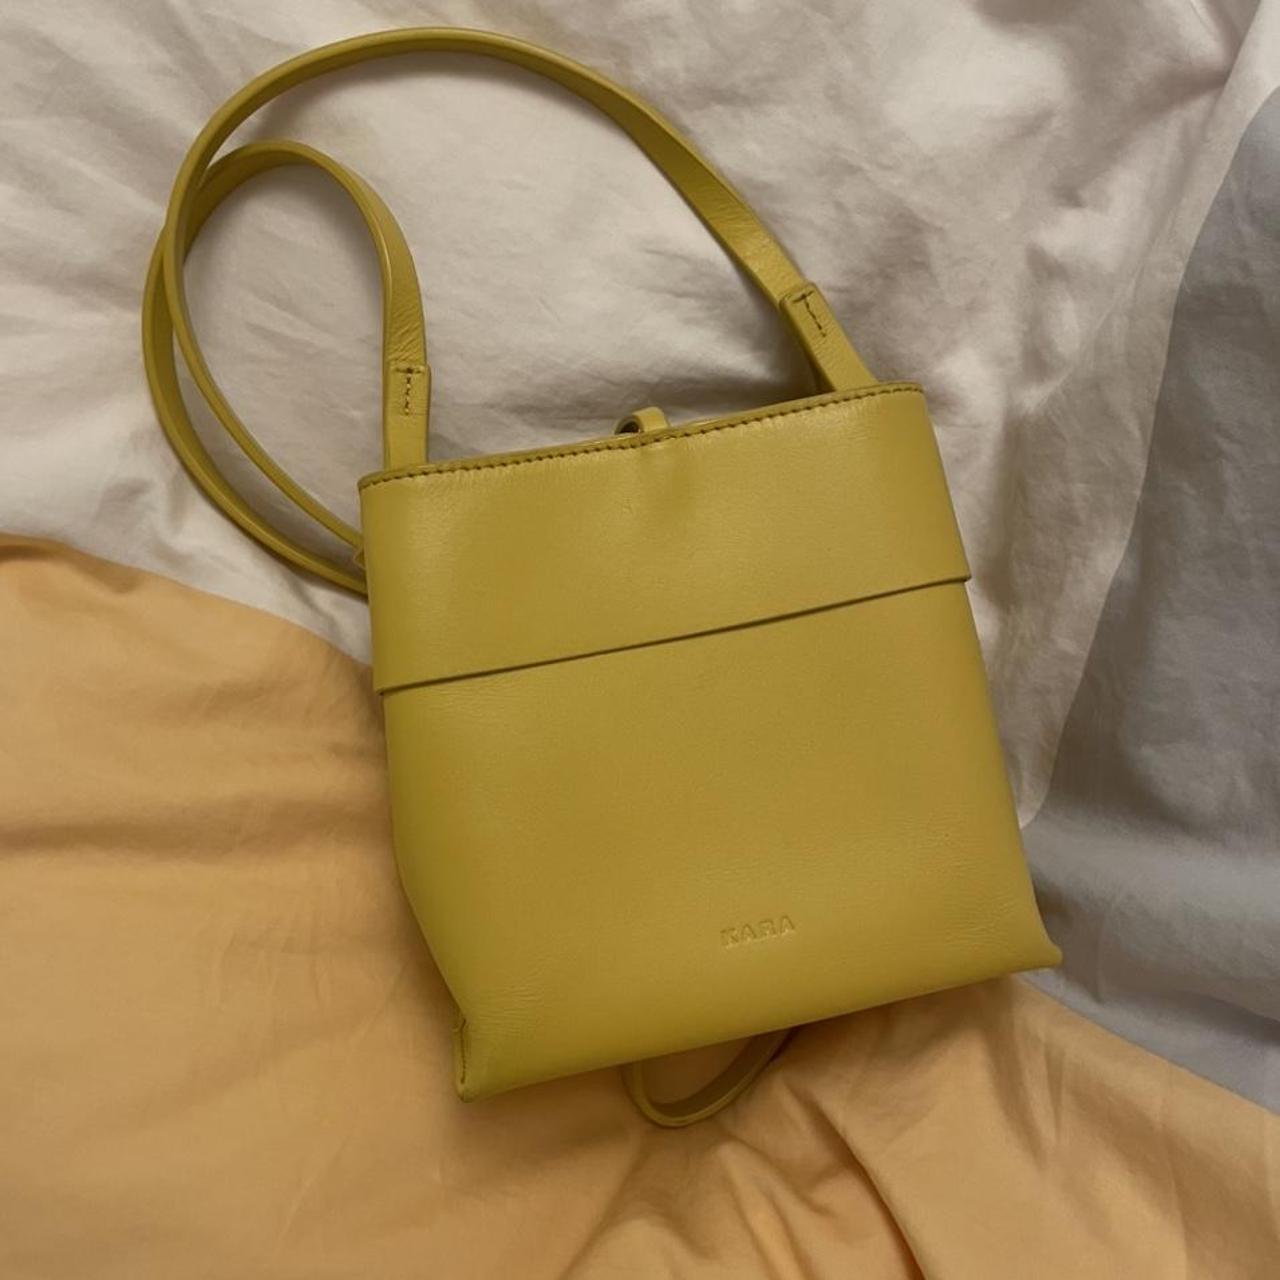 Kara Women's Yellow Bag (2)